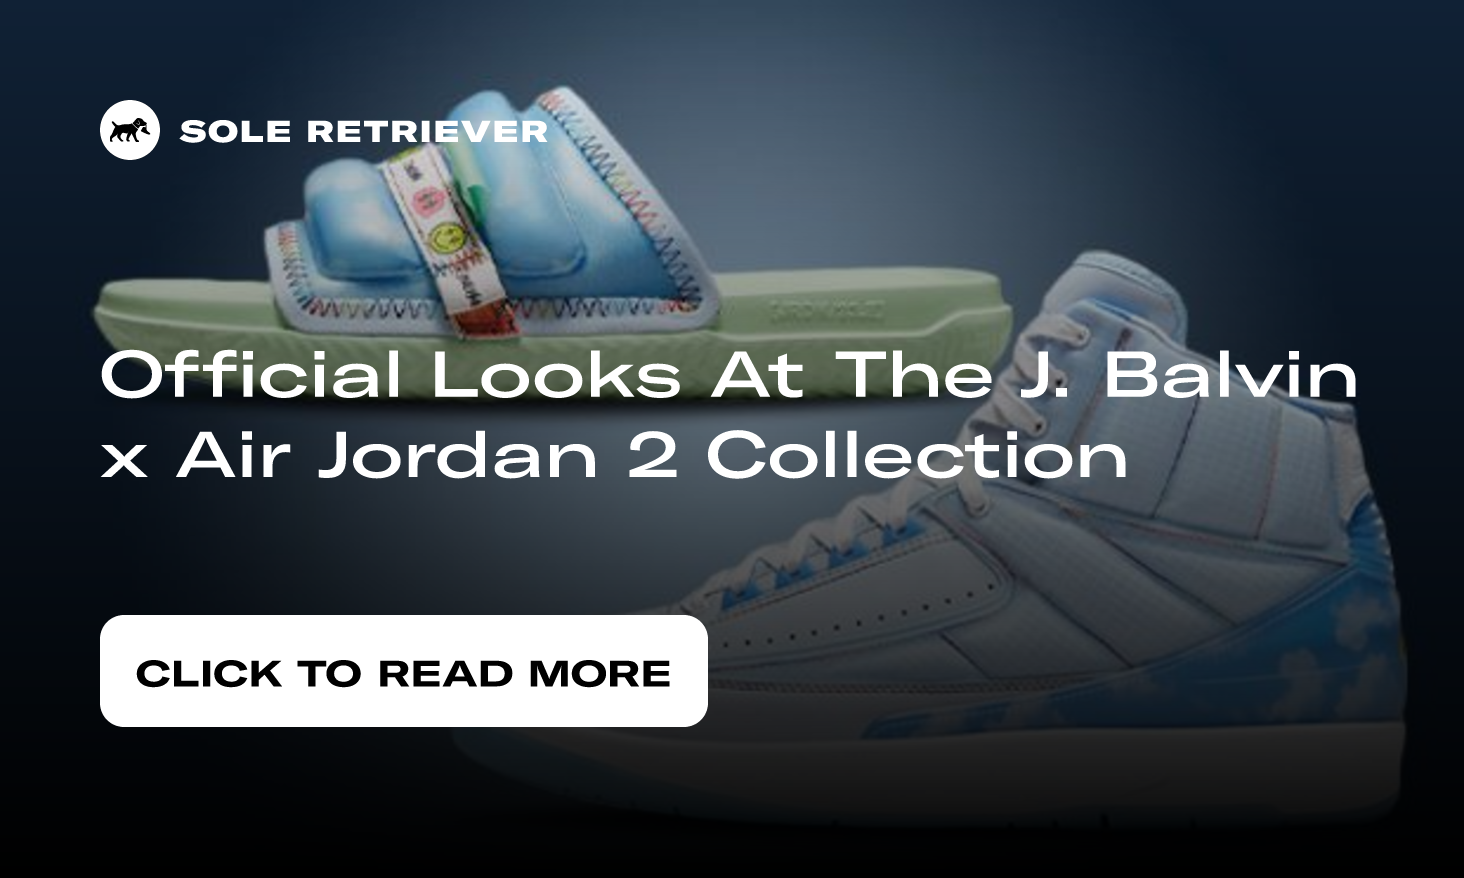 Jordan Shoes, Apparel, & Accessories